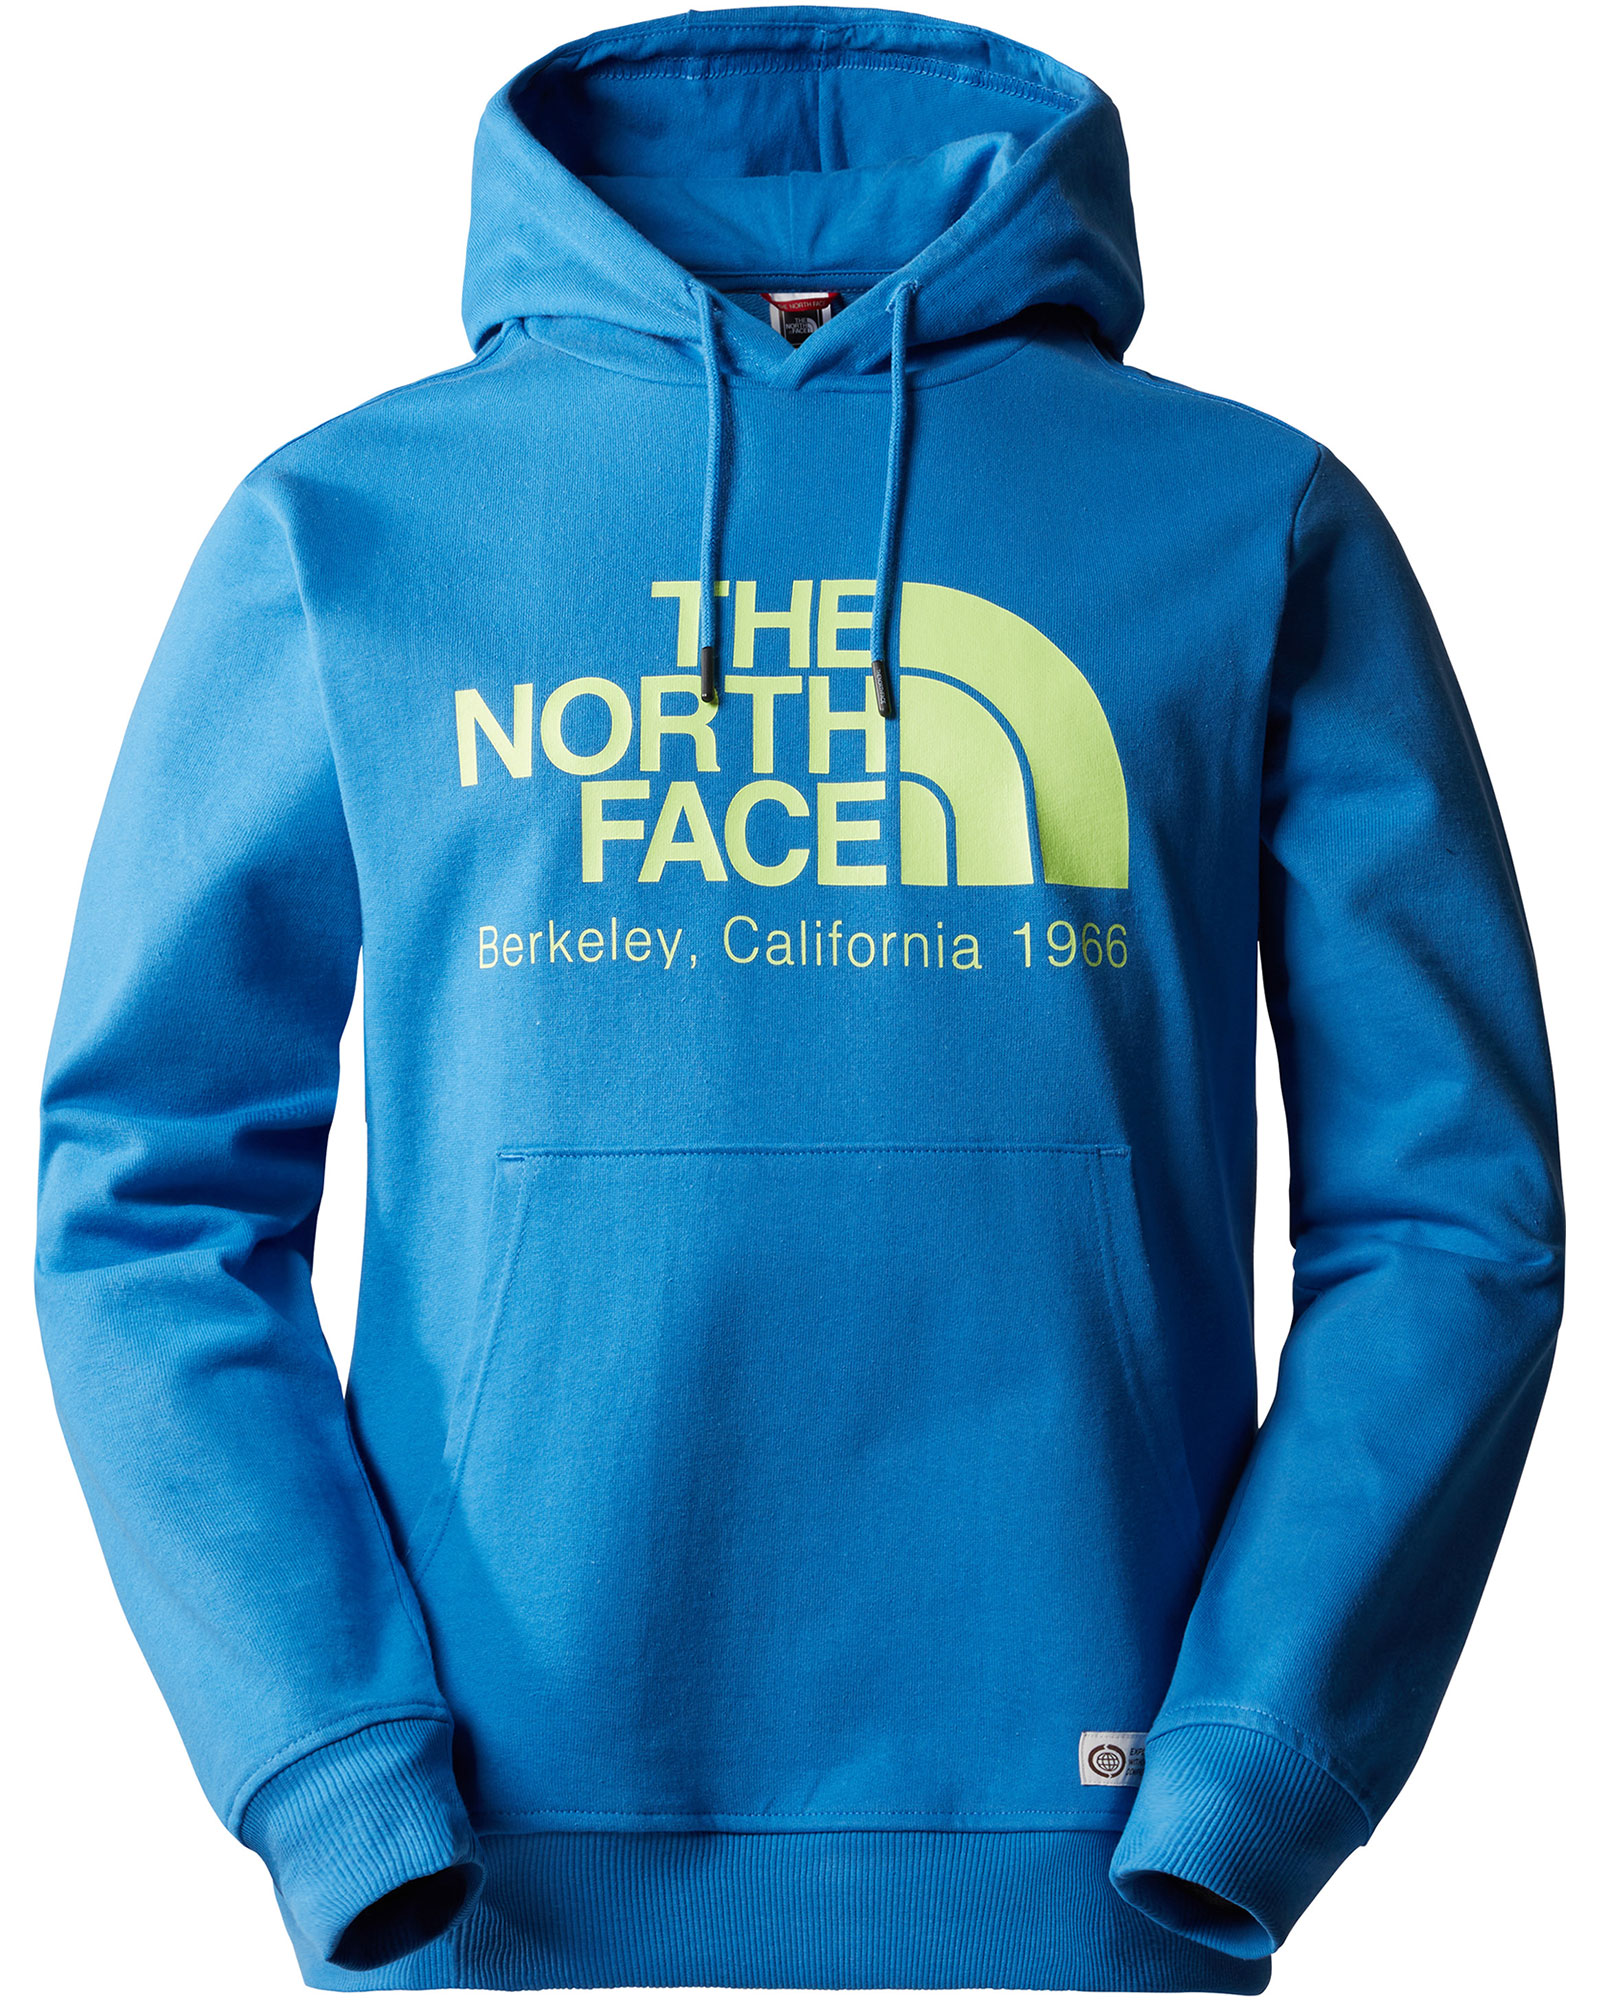 The North Face Men’s Berkeley California Hoodie - Super Sonic Blue XXL